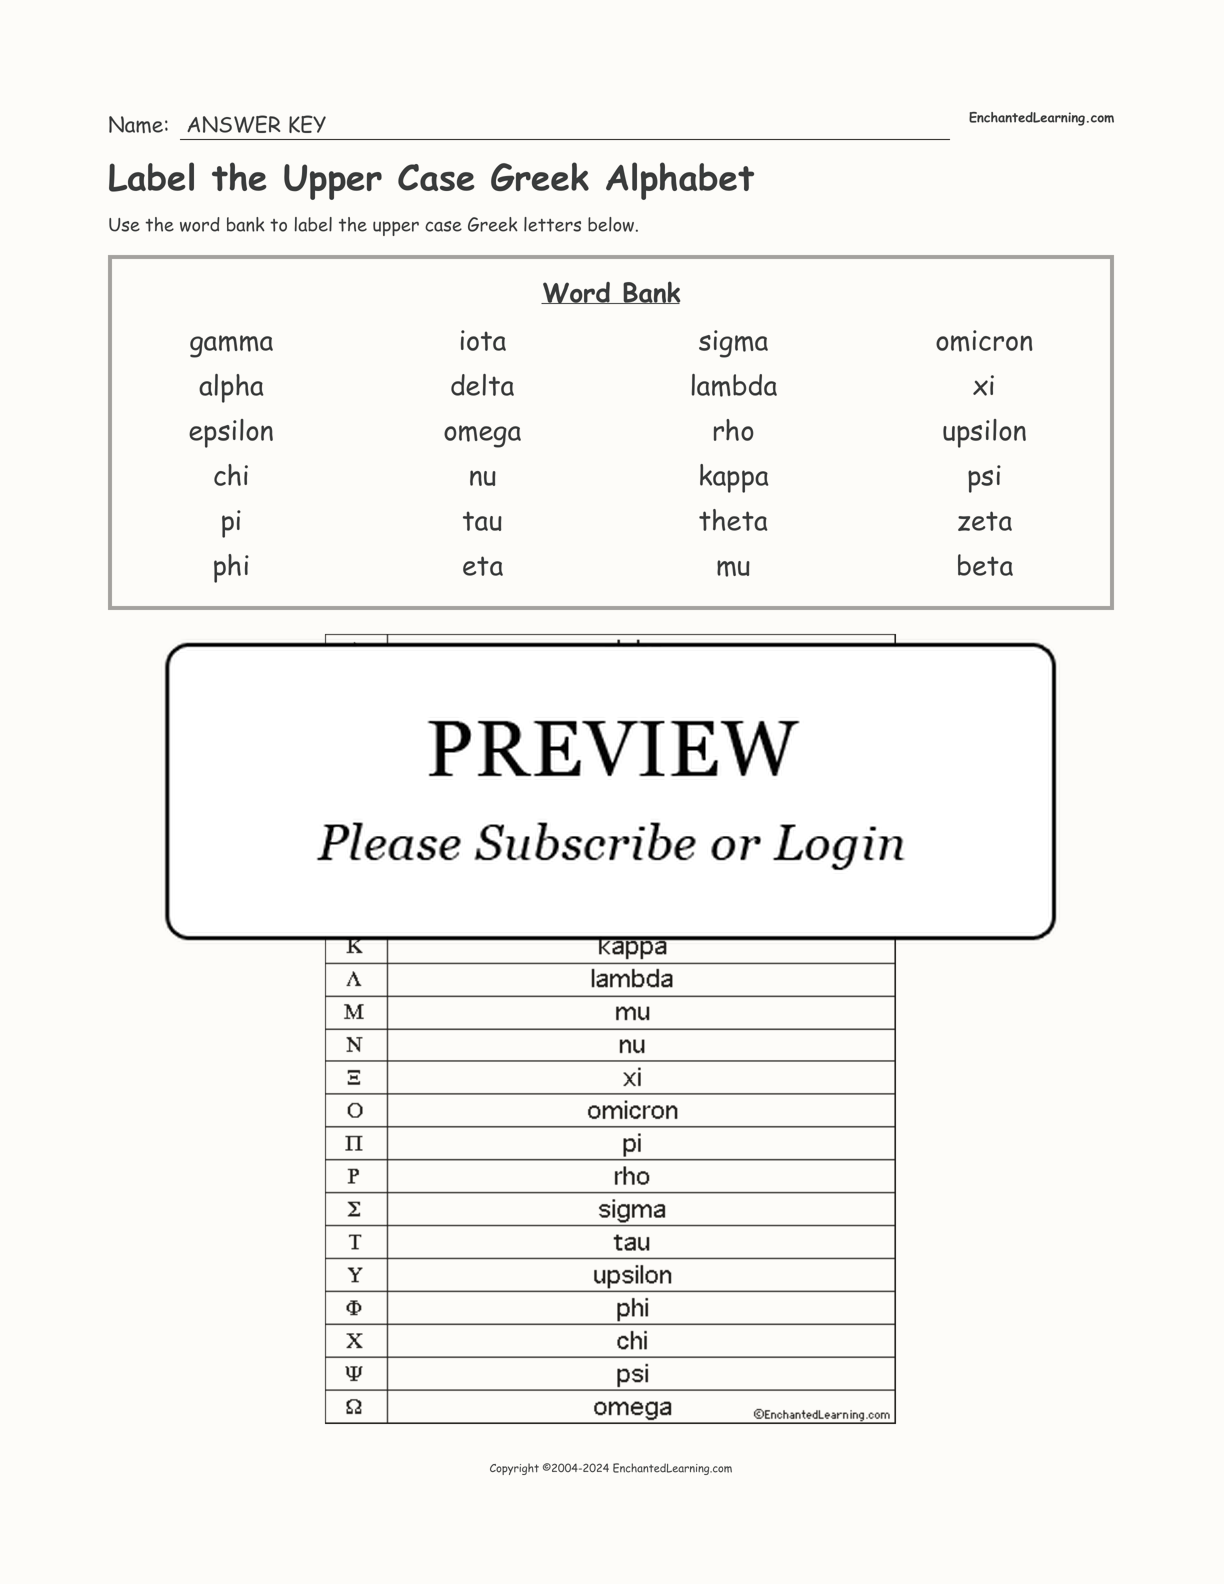 Label the Upper Case Greek Alphabet interactive worksheet page 2